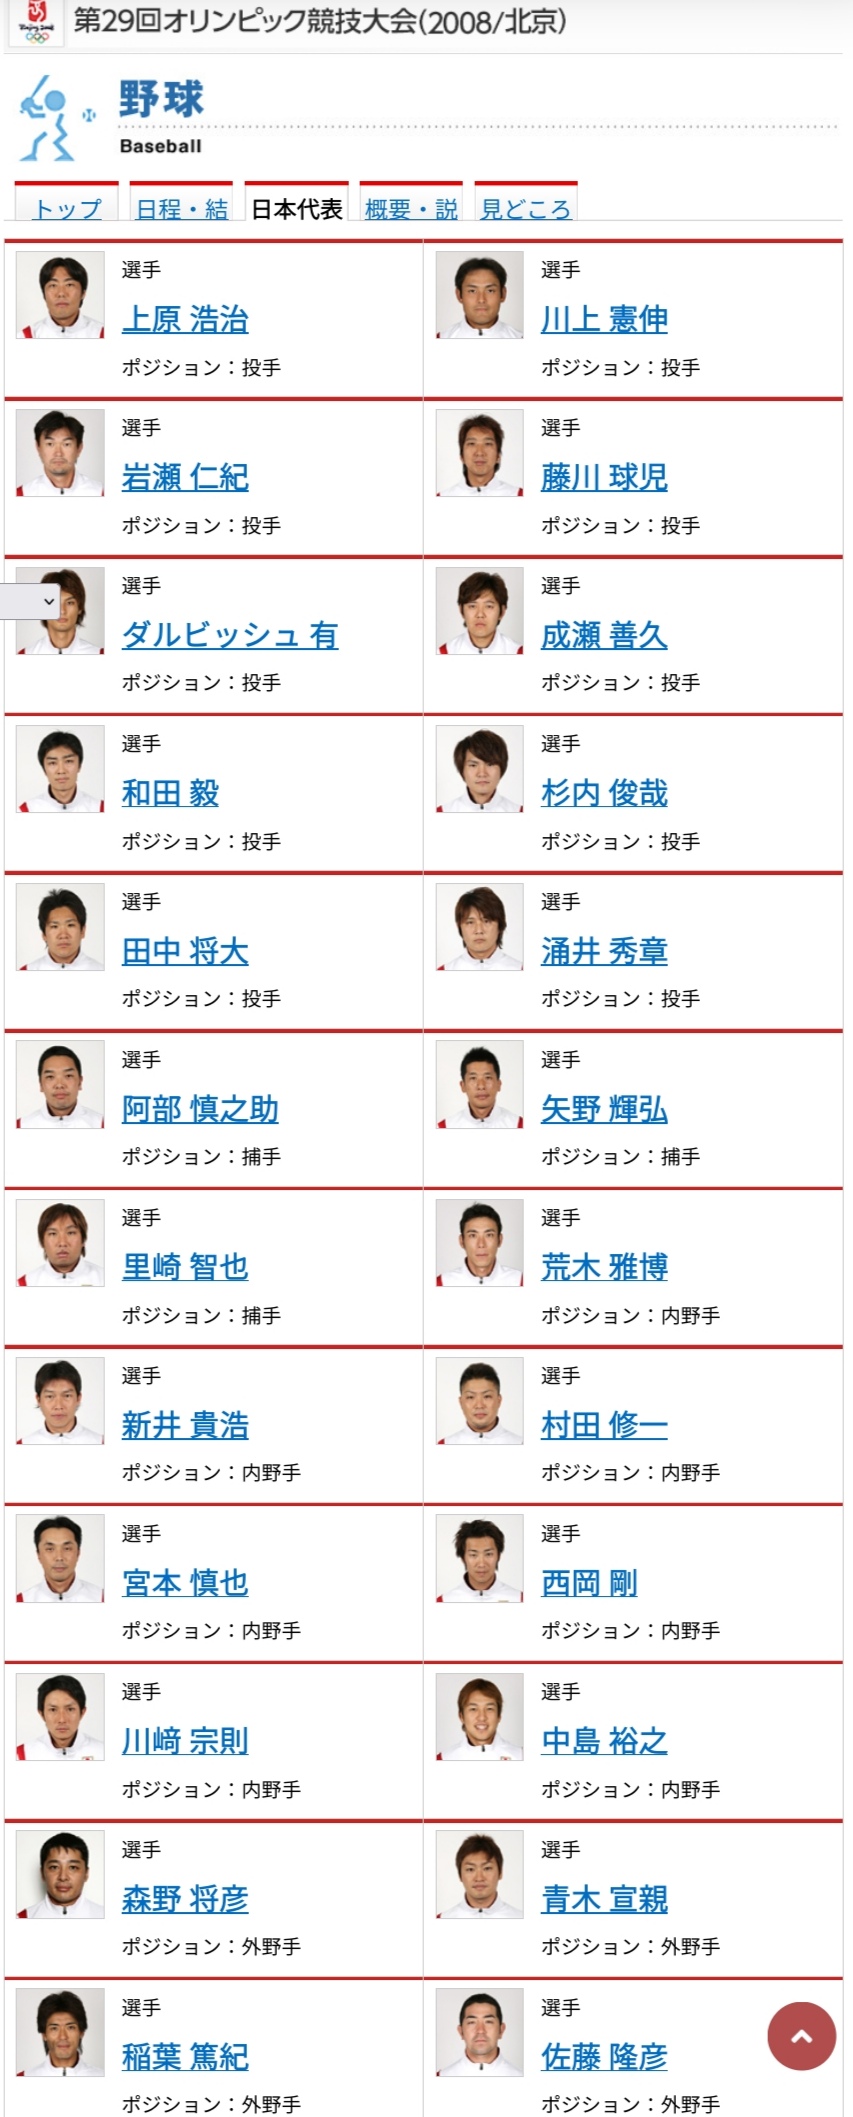 2008北京五輪野球日本代表メンバー